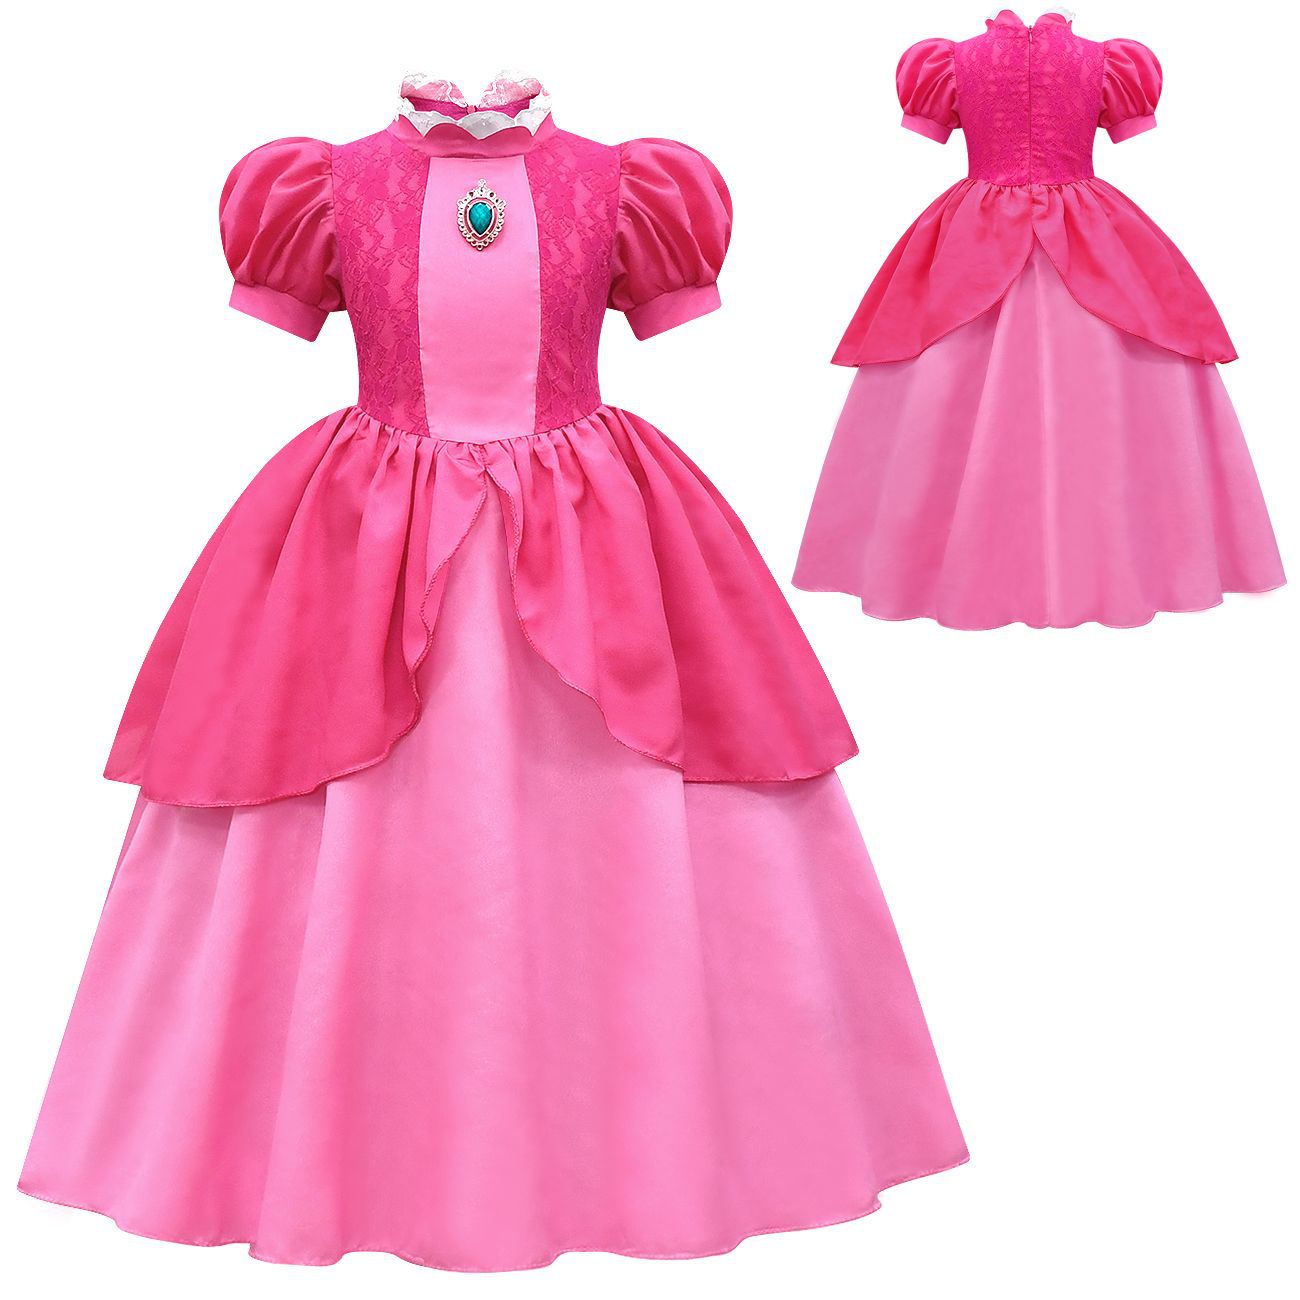 Super Mario Bros Princess Peach Kids Girls Tutu Dress Outfits Cosplay Costume